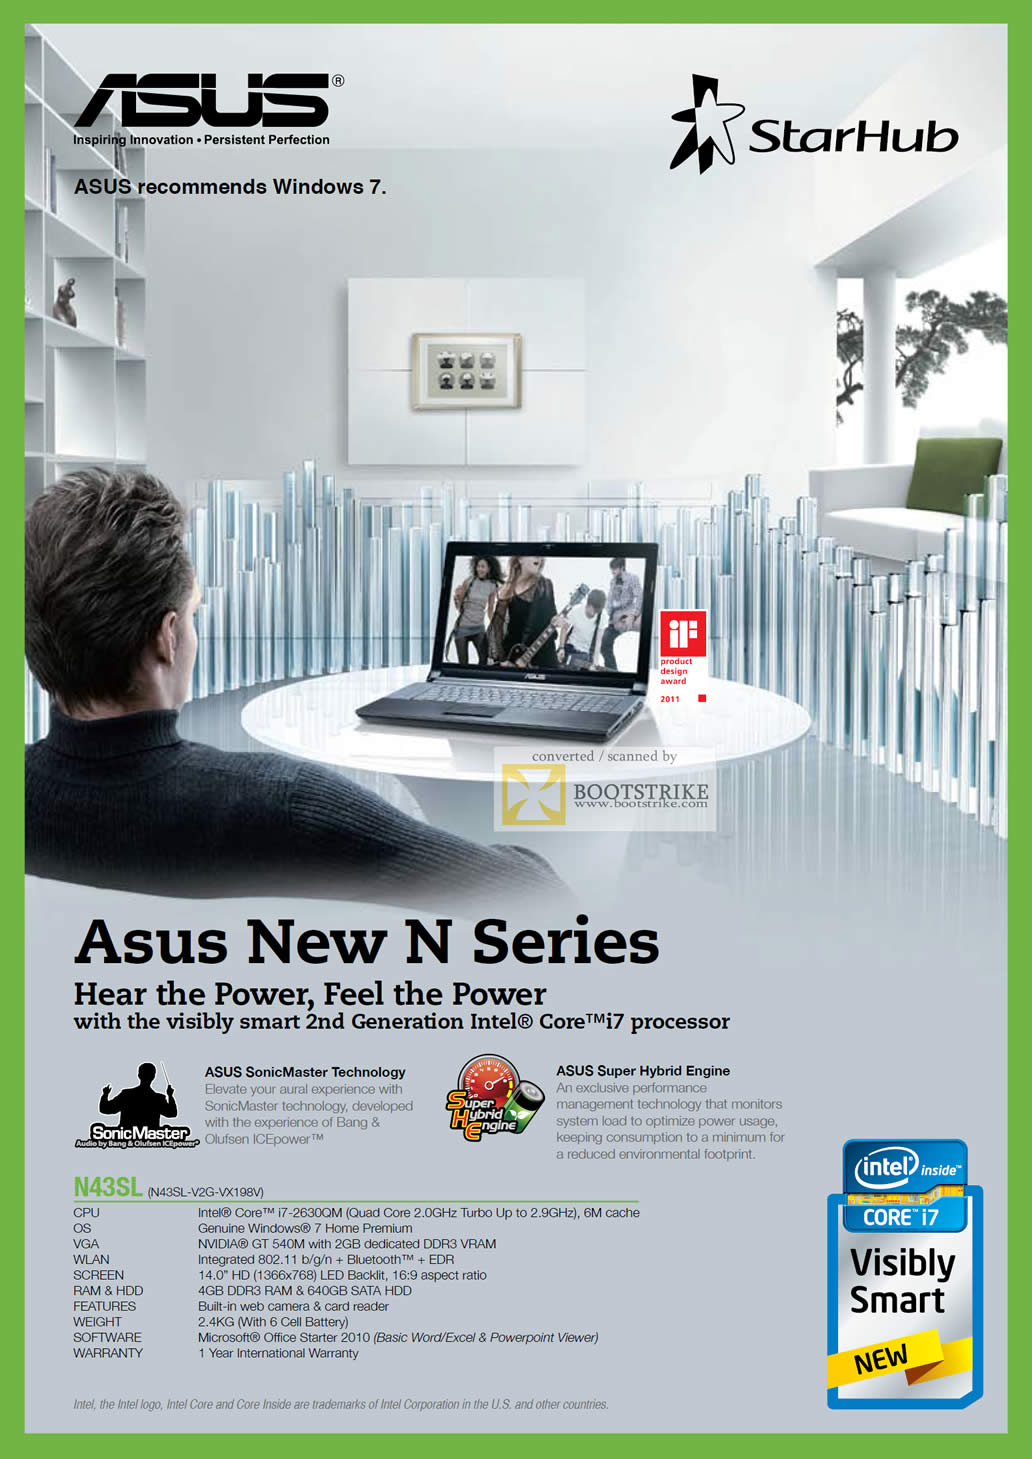 PC Show 2011 price list image brochure of Starhub ASUS N42SL-V2G-VX198V Specifications SonicMaster ASUS Super Hybrid Engine